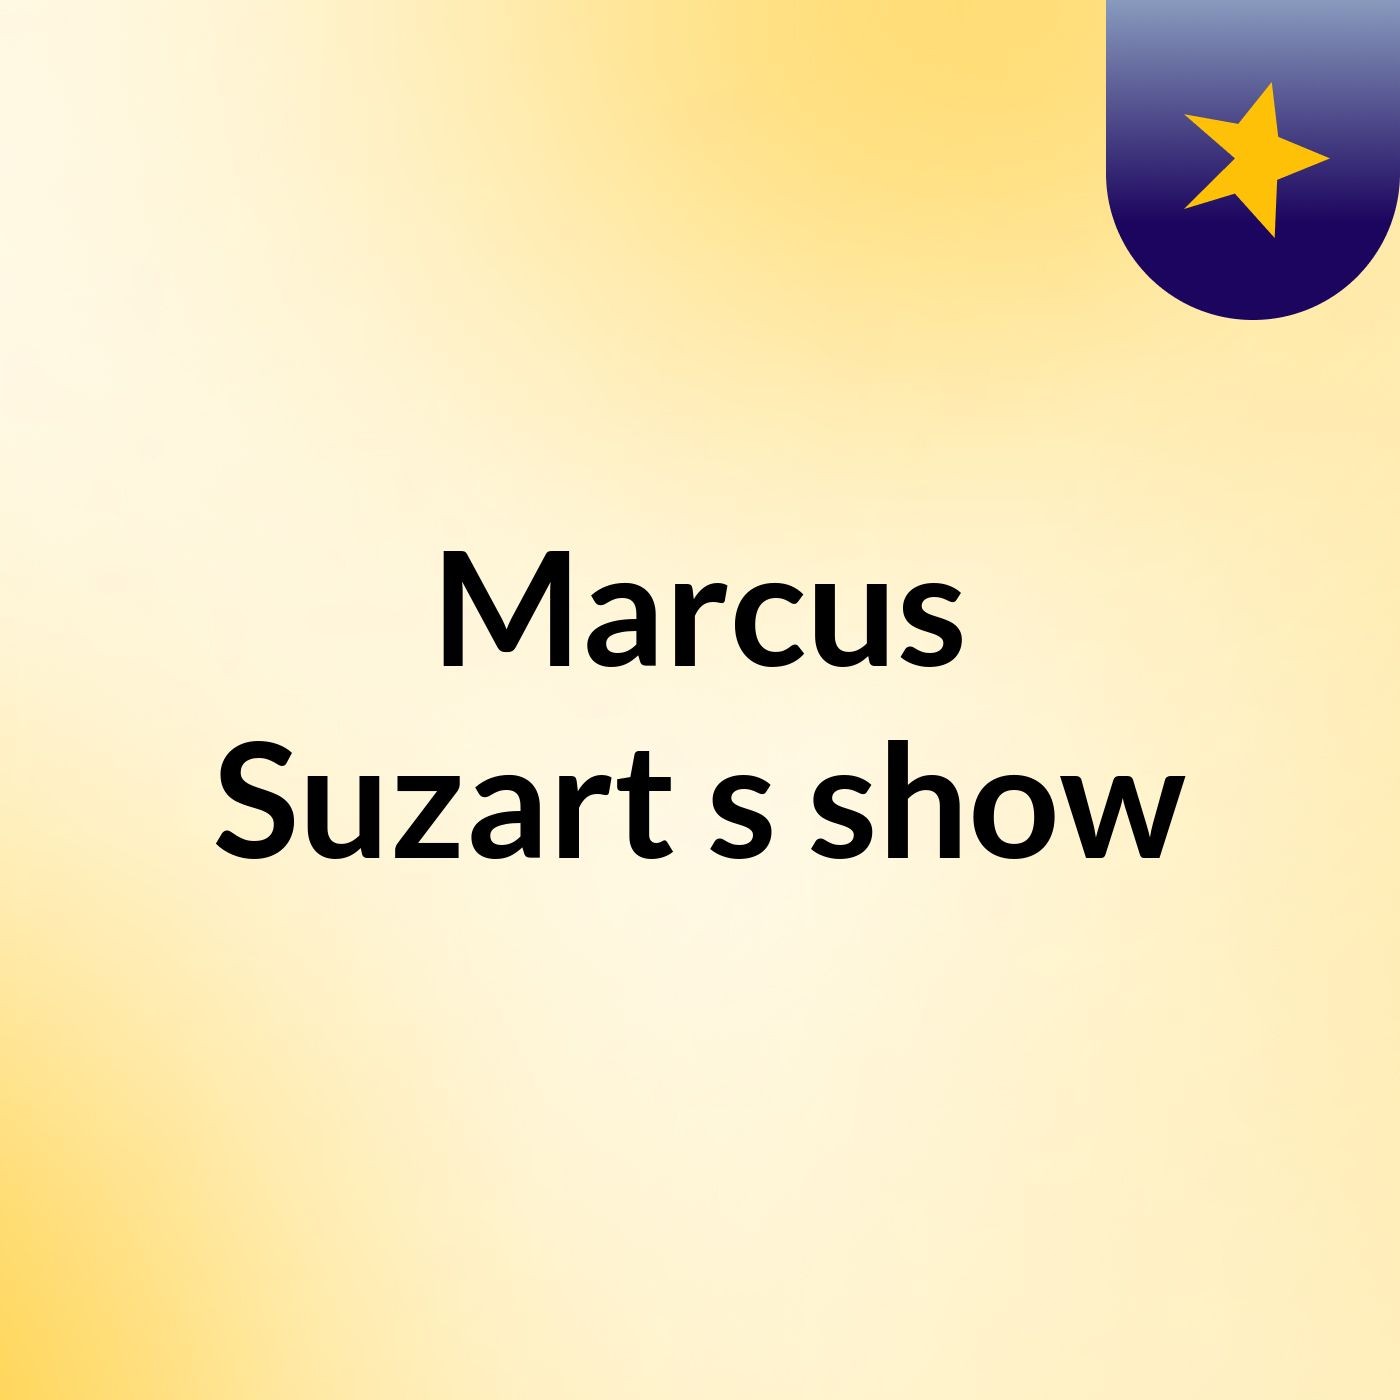 Marcus Suzart's show